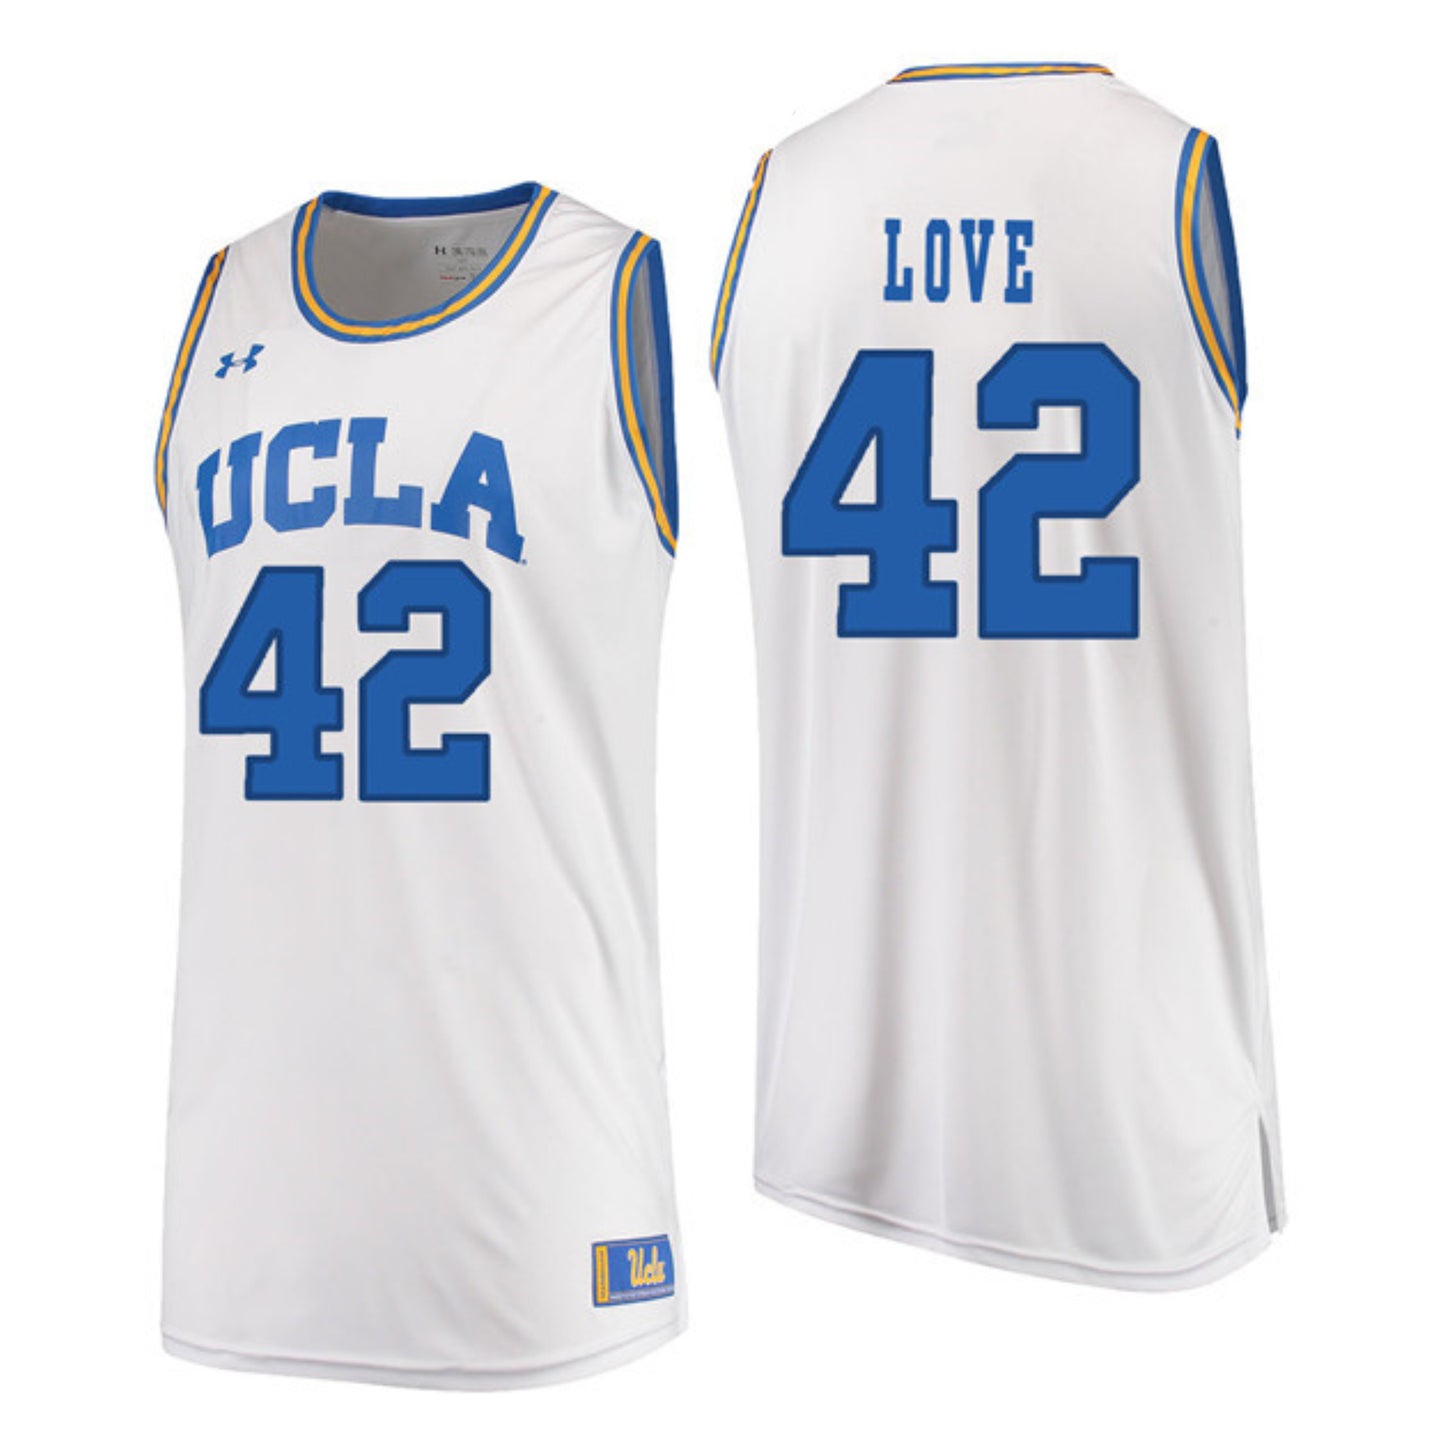 Original Retro Brand Men's Kevin Love White UCLA Bruins Commemorative Classic Basketball Jersey - White